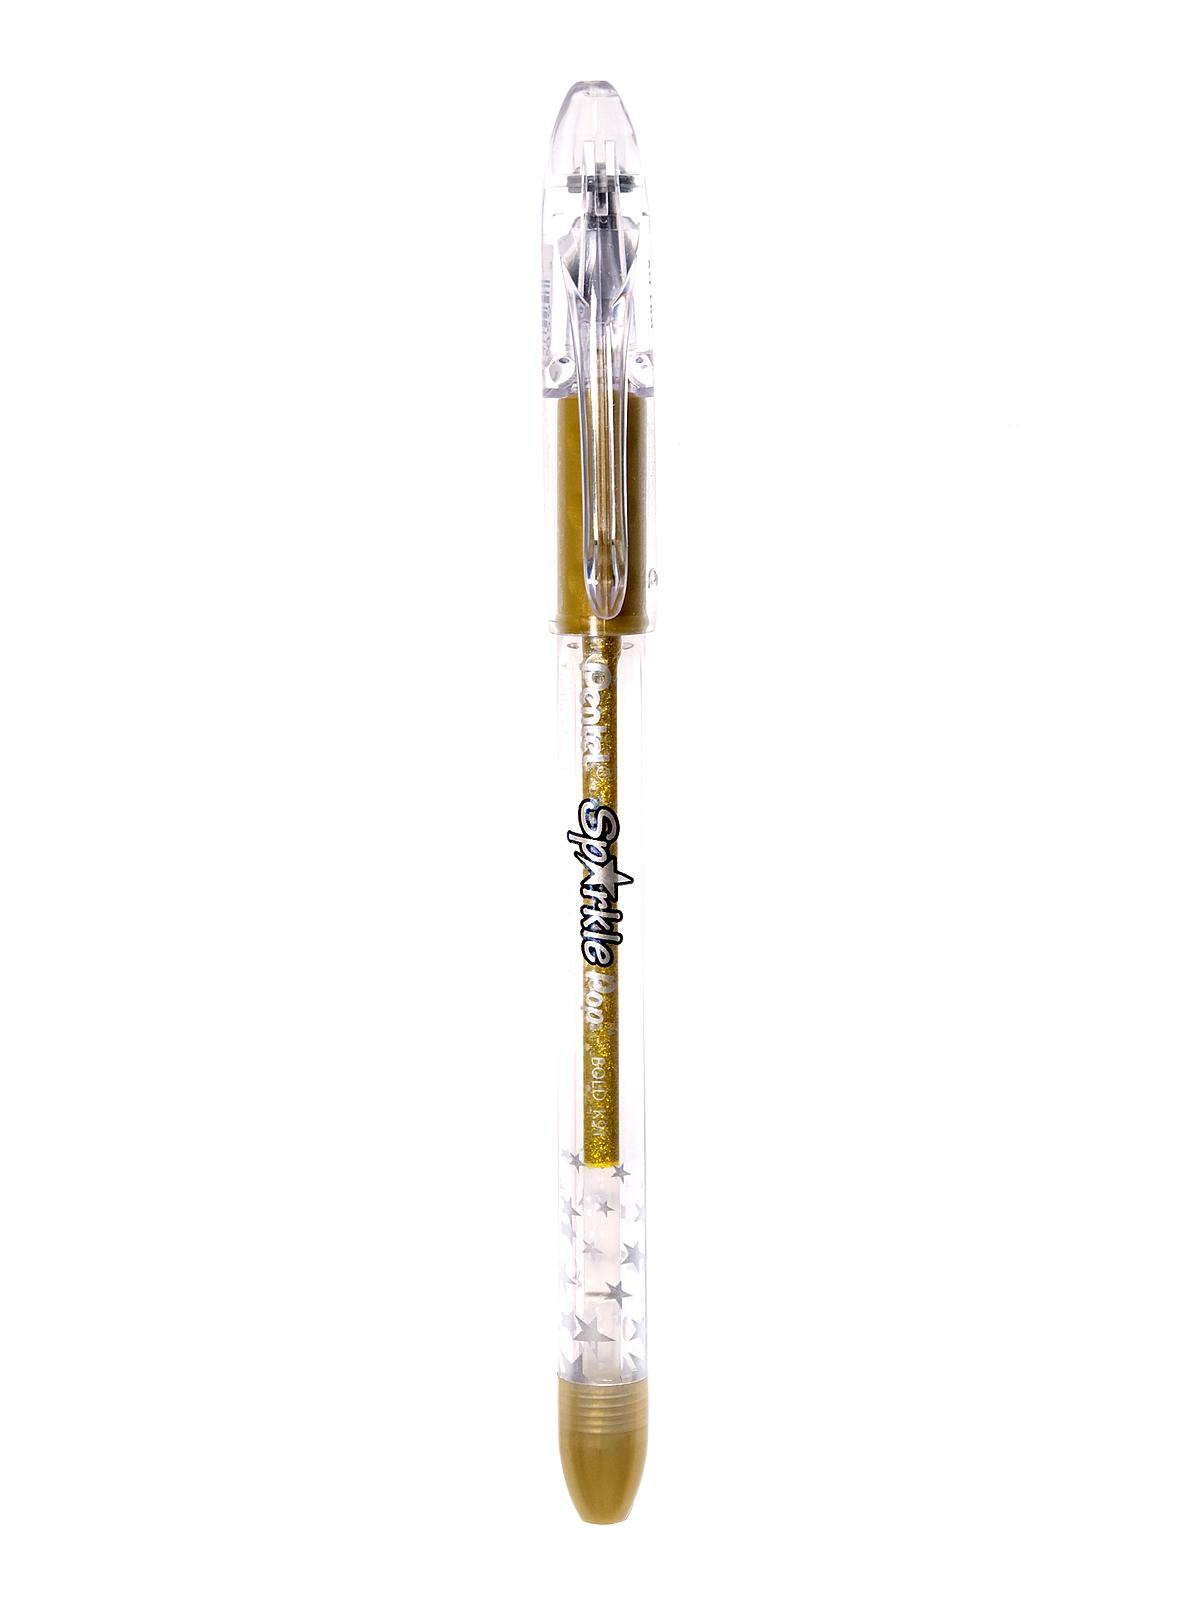 Pentel Sparkle Pop Metallic Gel Pen Gold